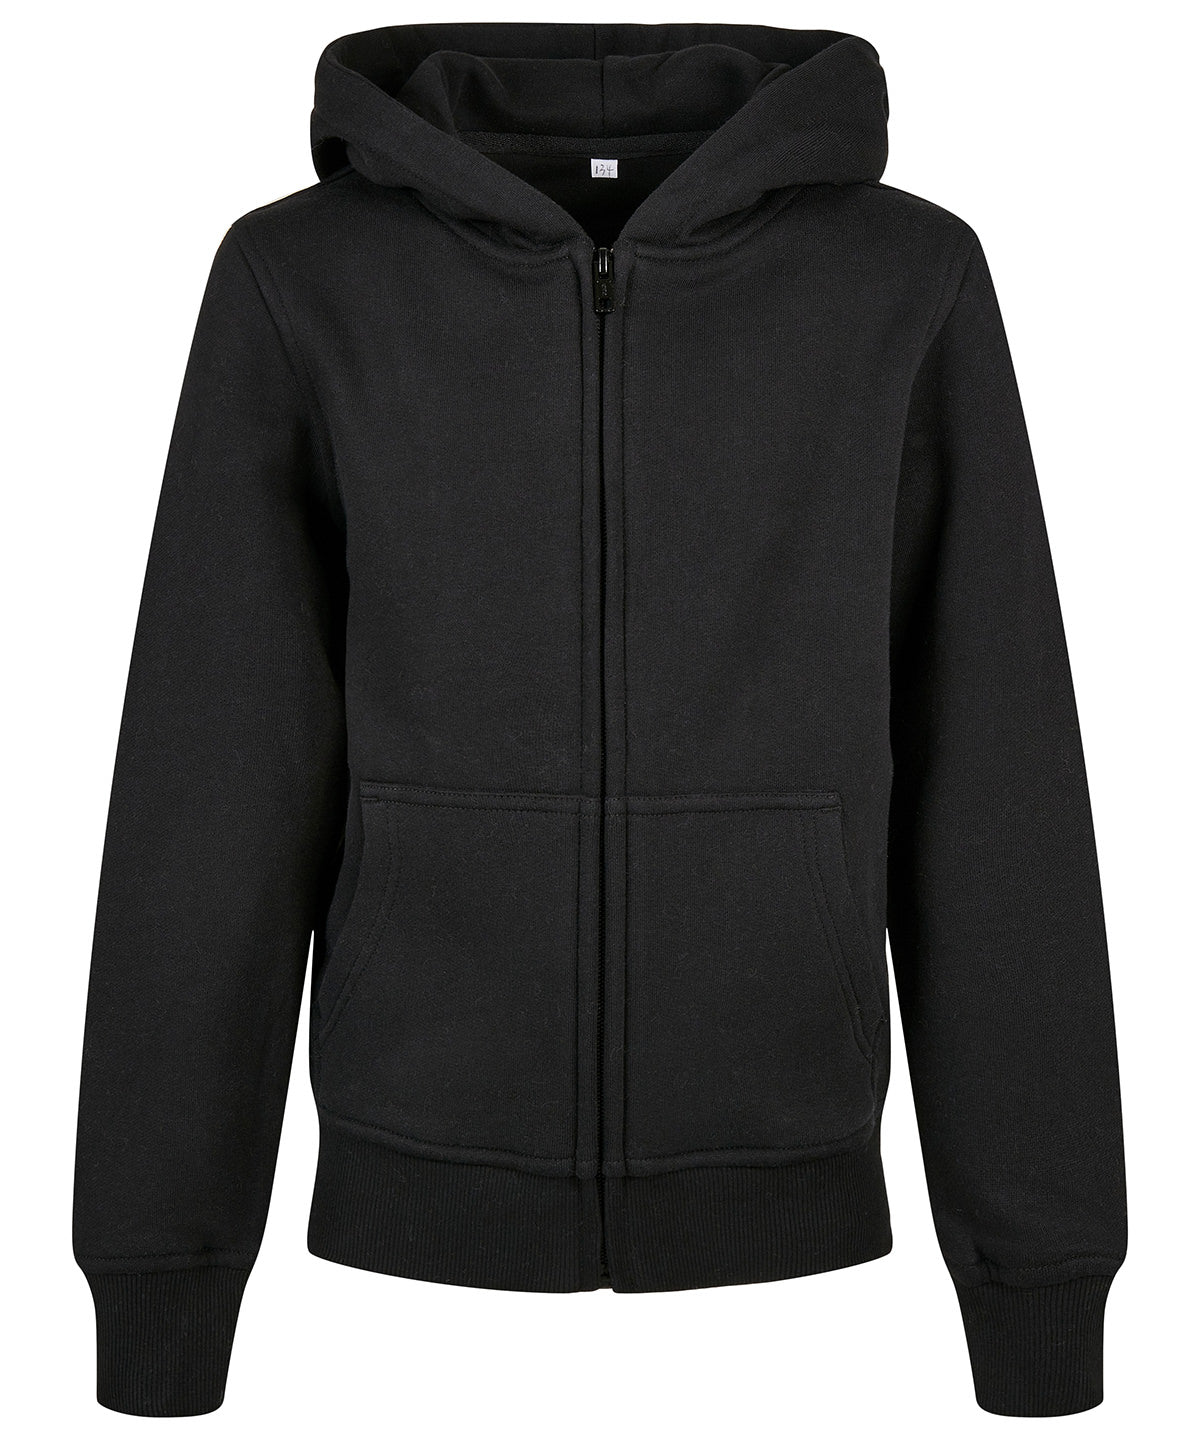 Organic kids basic zip hoodie | Black